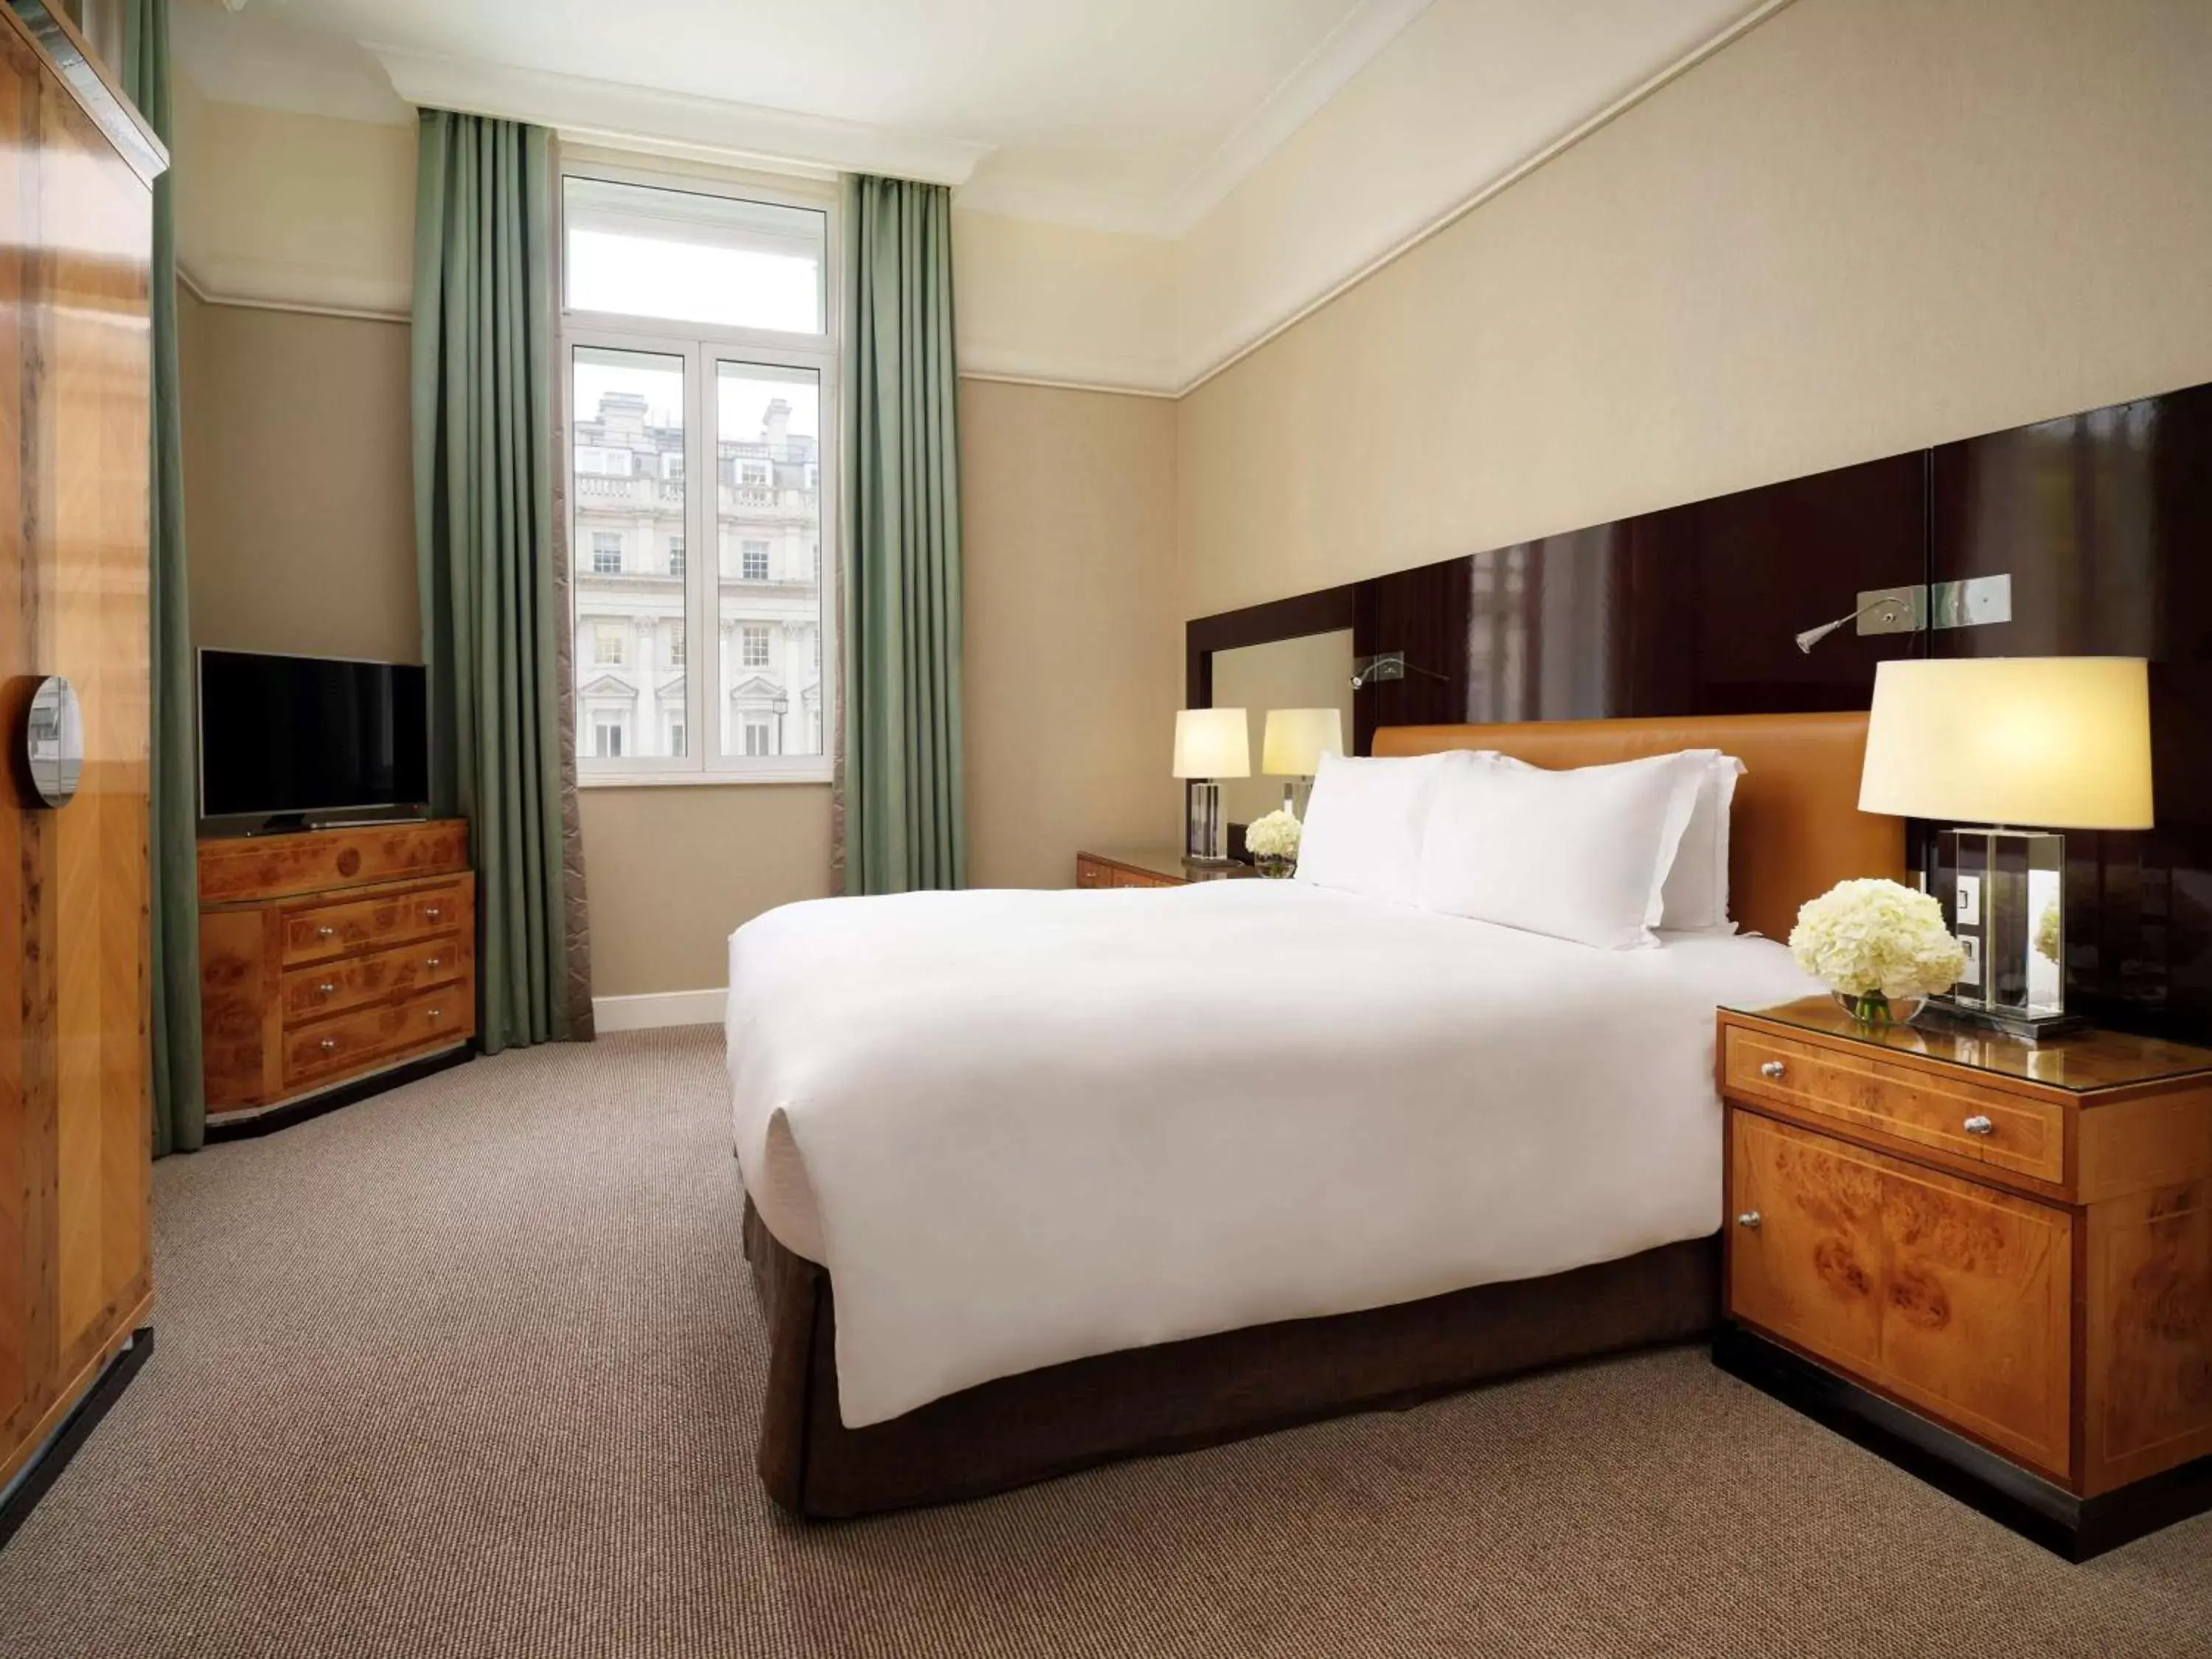 Bedroom, Bed in Sofitel London St James